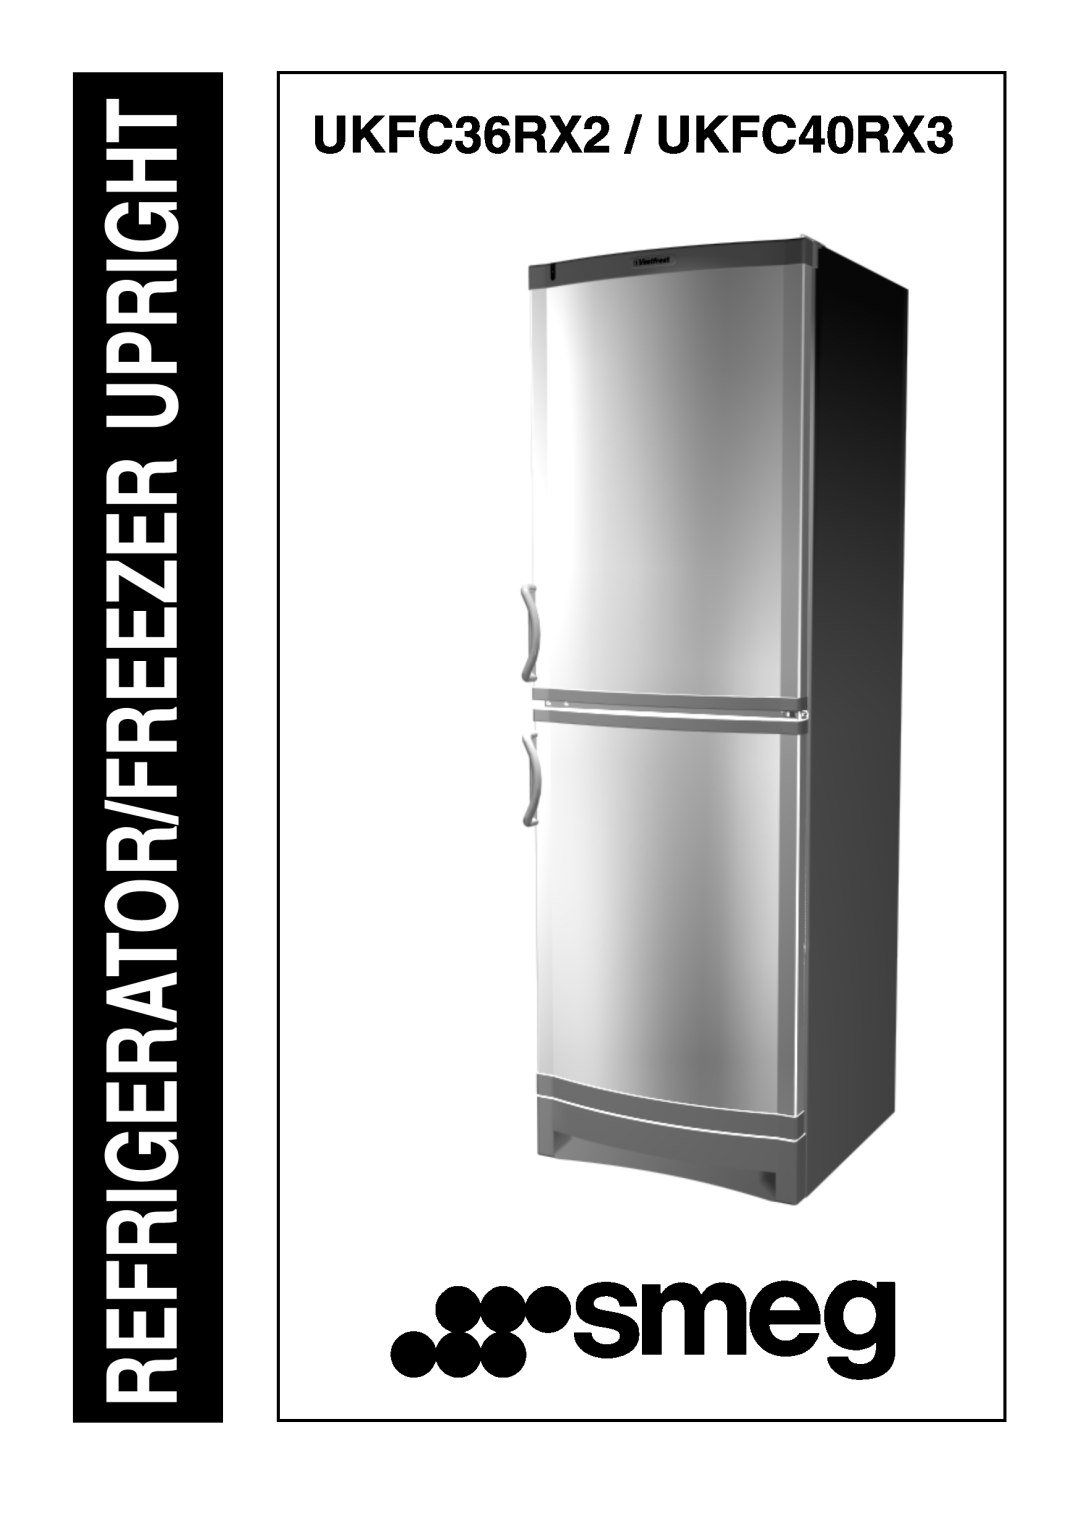 Smeg manual Refrigerator/Freezer Upright, UKFC36RX2 / UKFC40RX3 